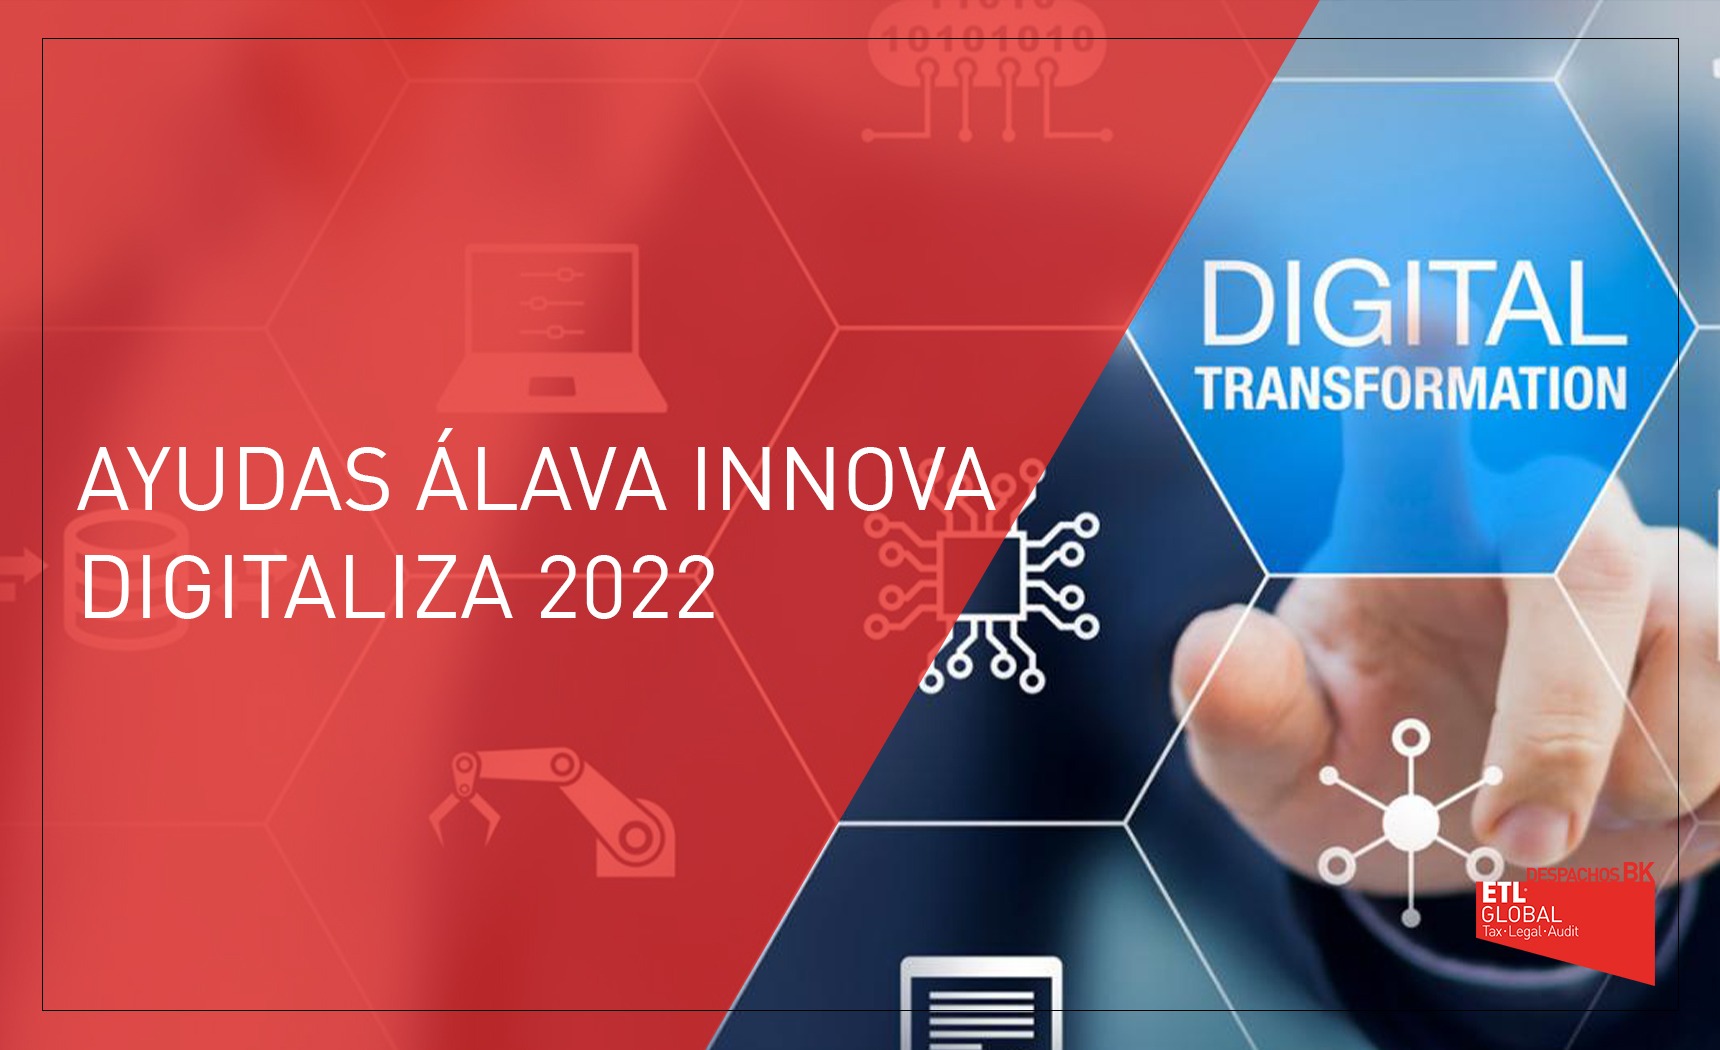 Ayudas Álava Innova Digitaliza 2022